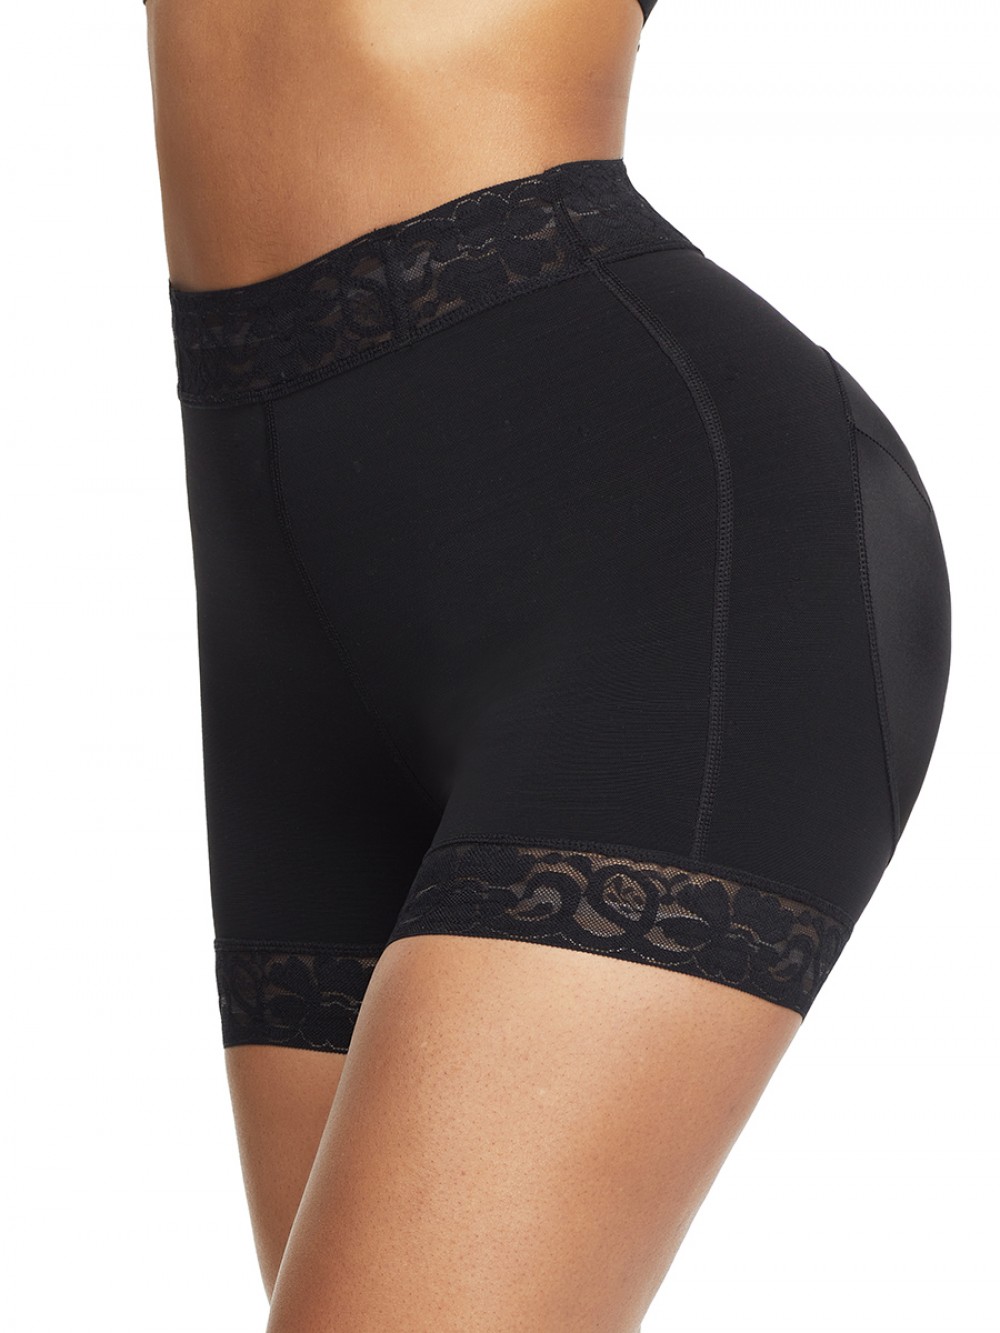 Black High Waist Lace Butt Enhancer Panty Secret Slimming